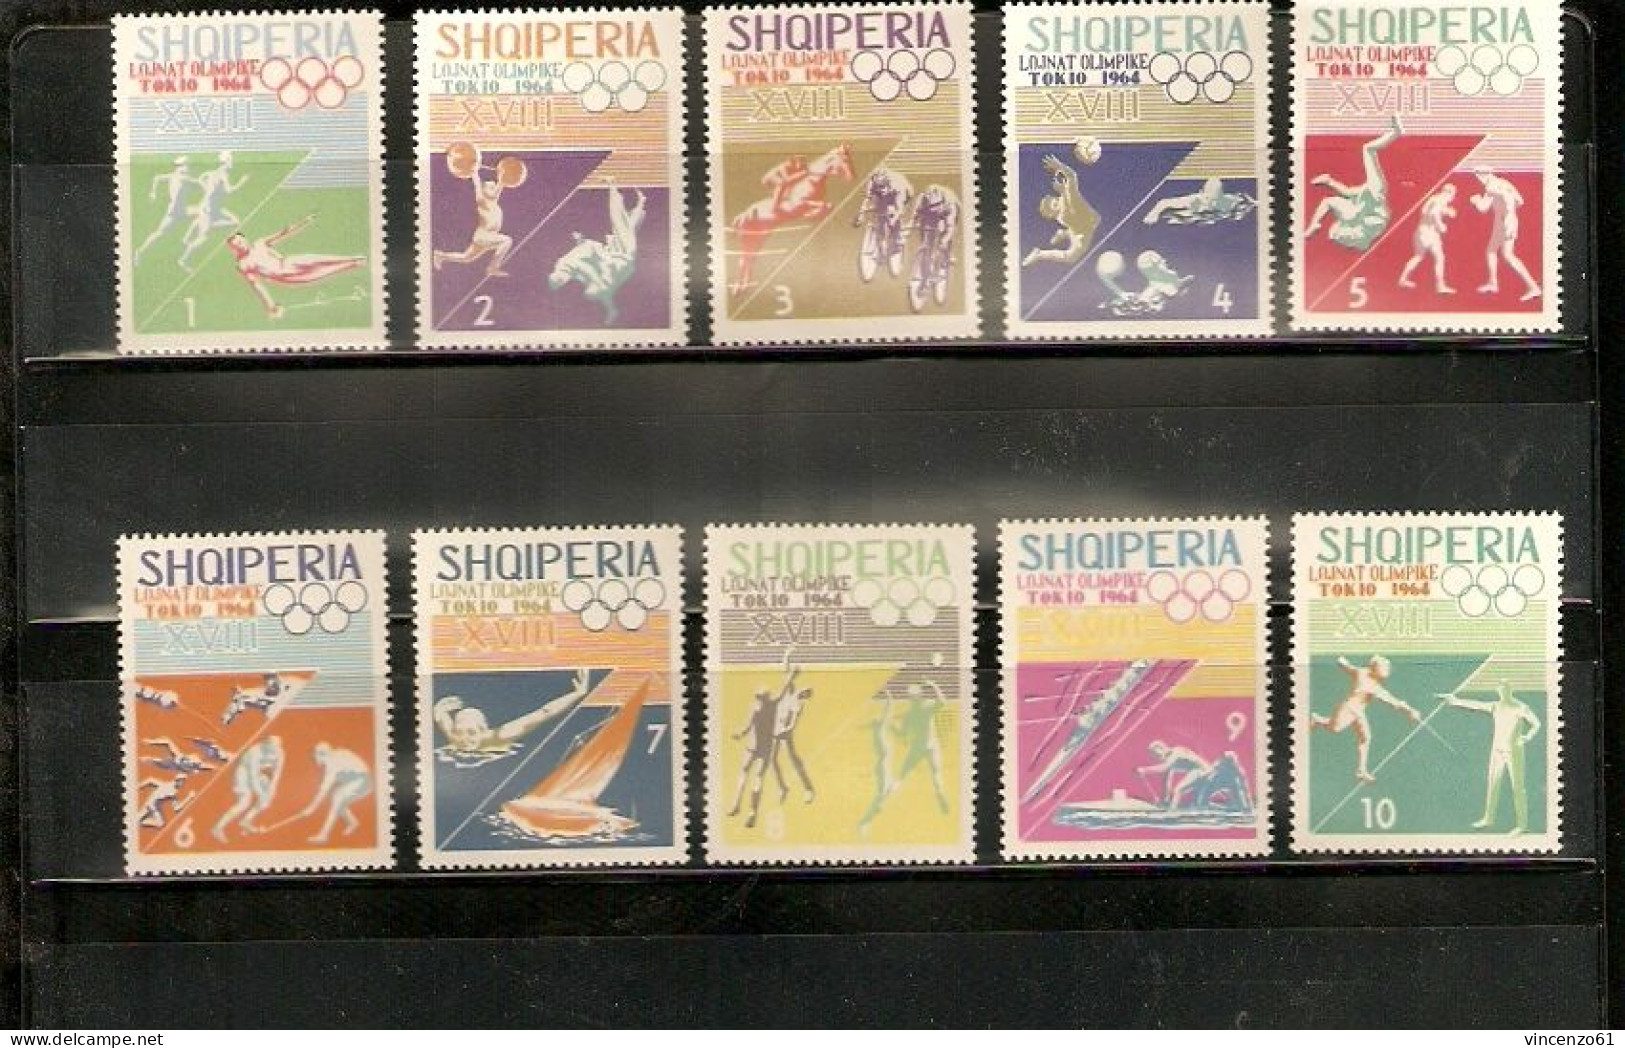 SHQIPERIA COMPLETE SERIE TOKIO 1964 OLIMPIC GAMES - Ete 1964: Tokyo